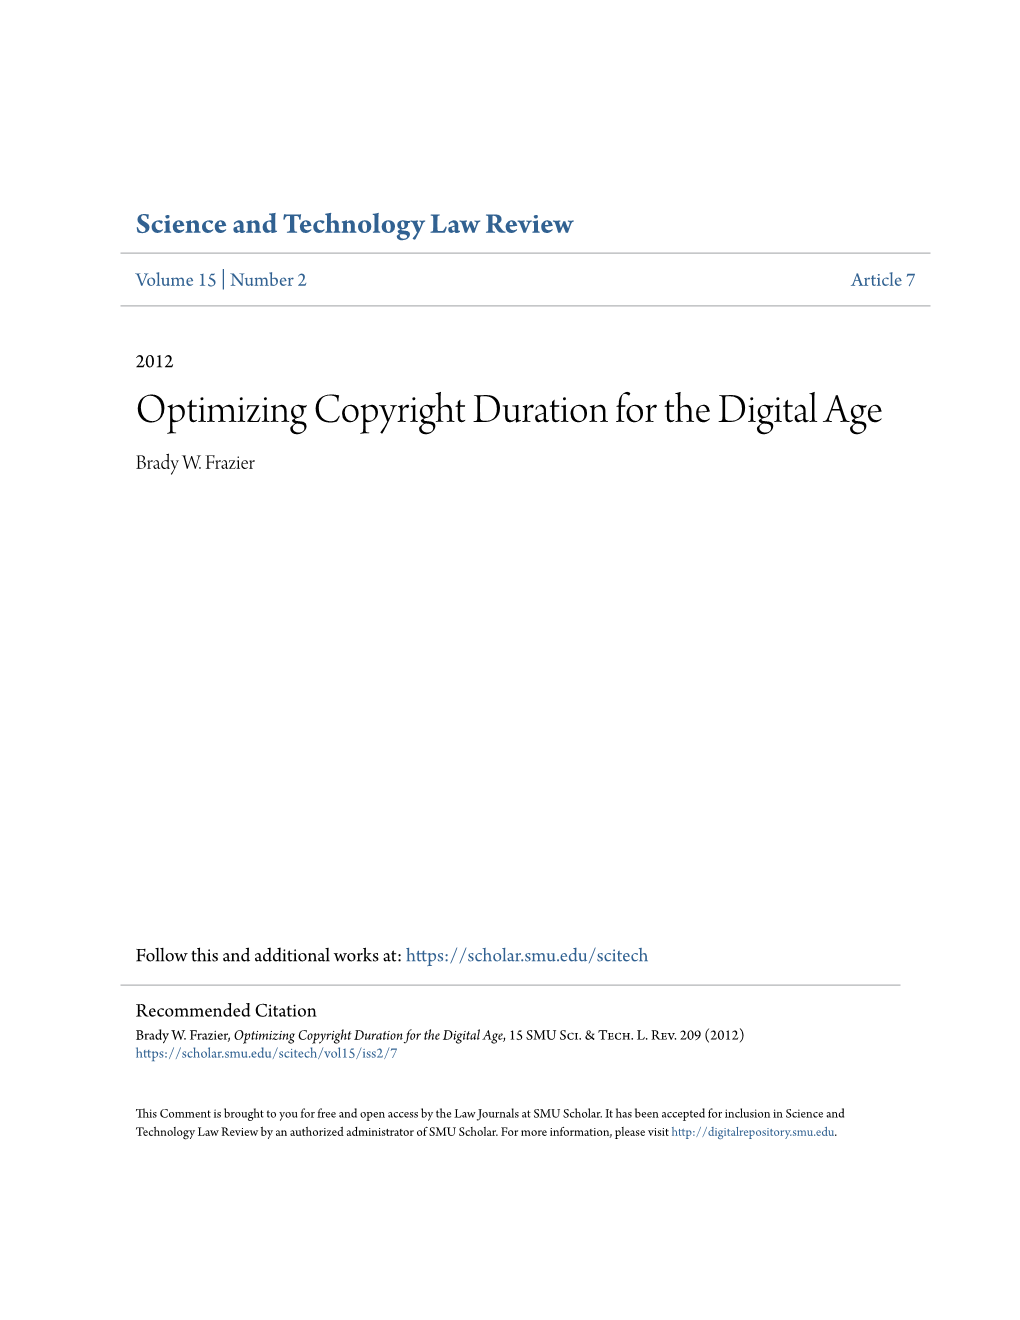 Optimizing Copyright Duration for the Digital Age Brady W